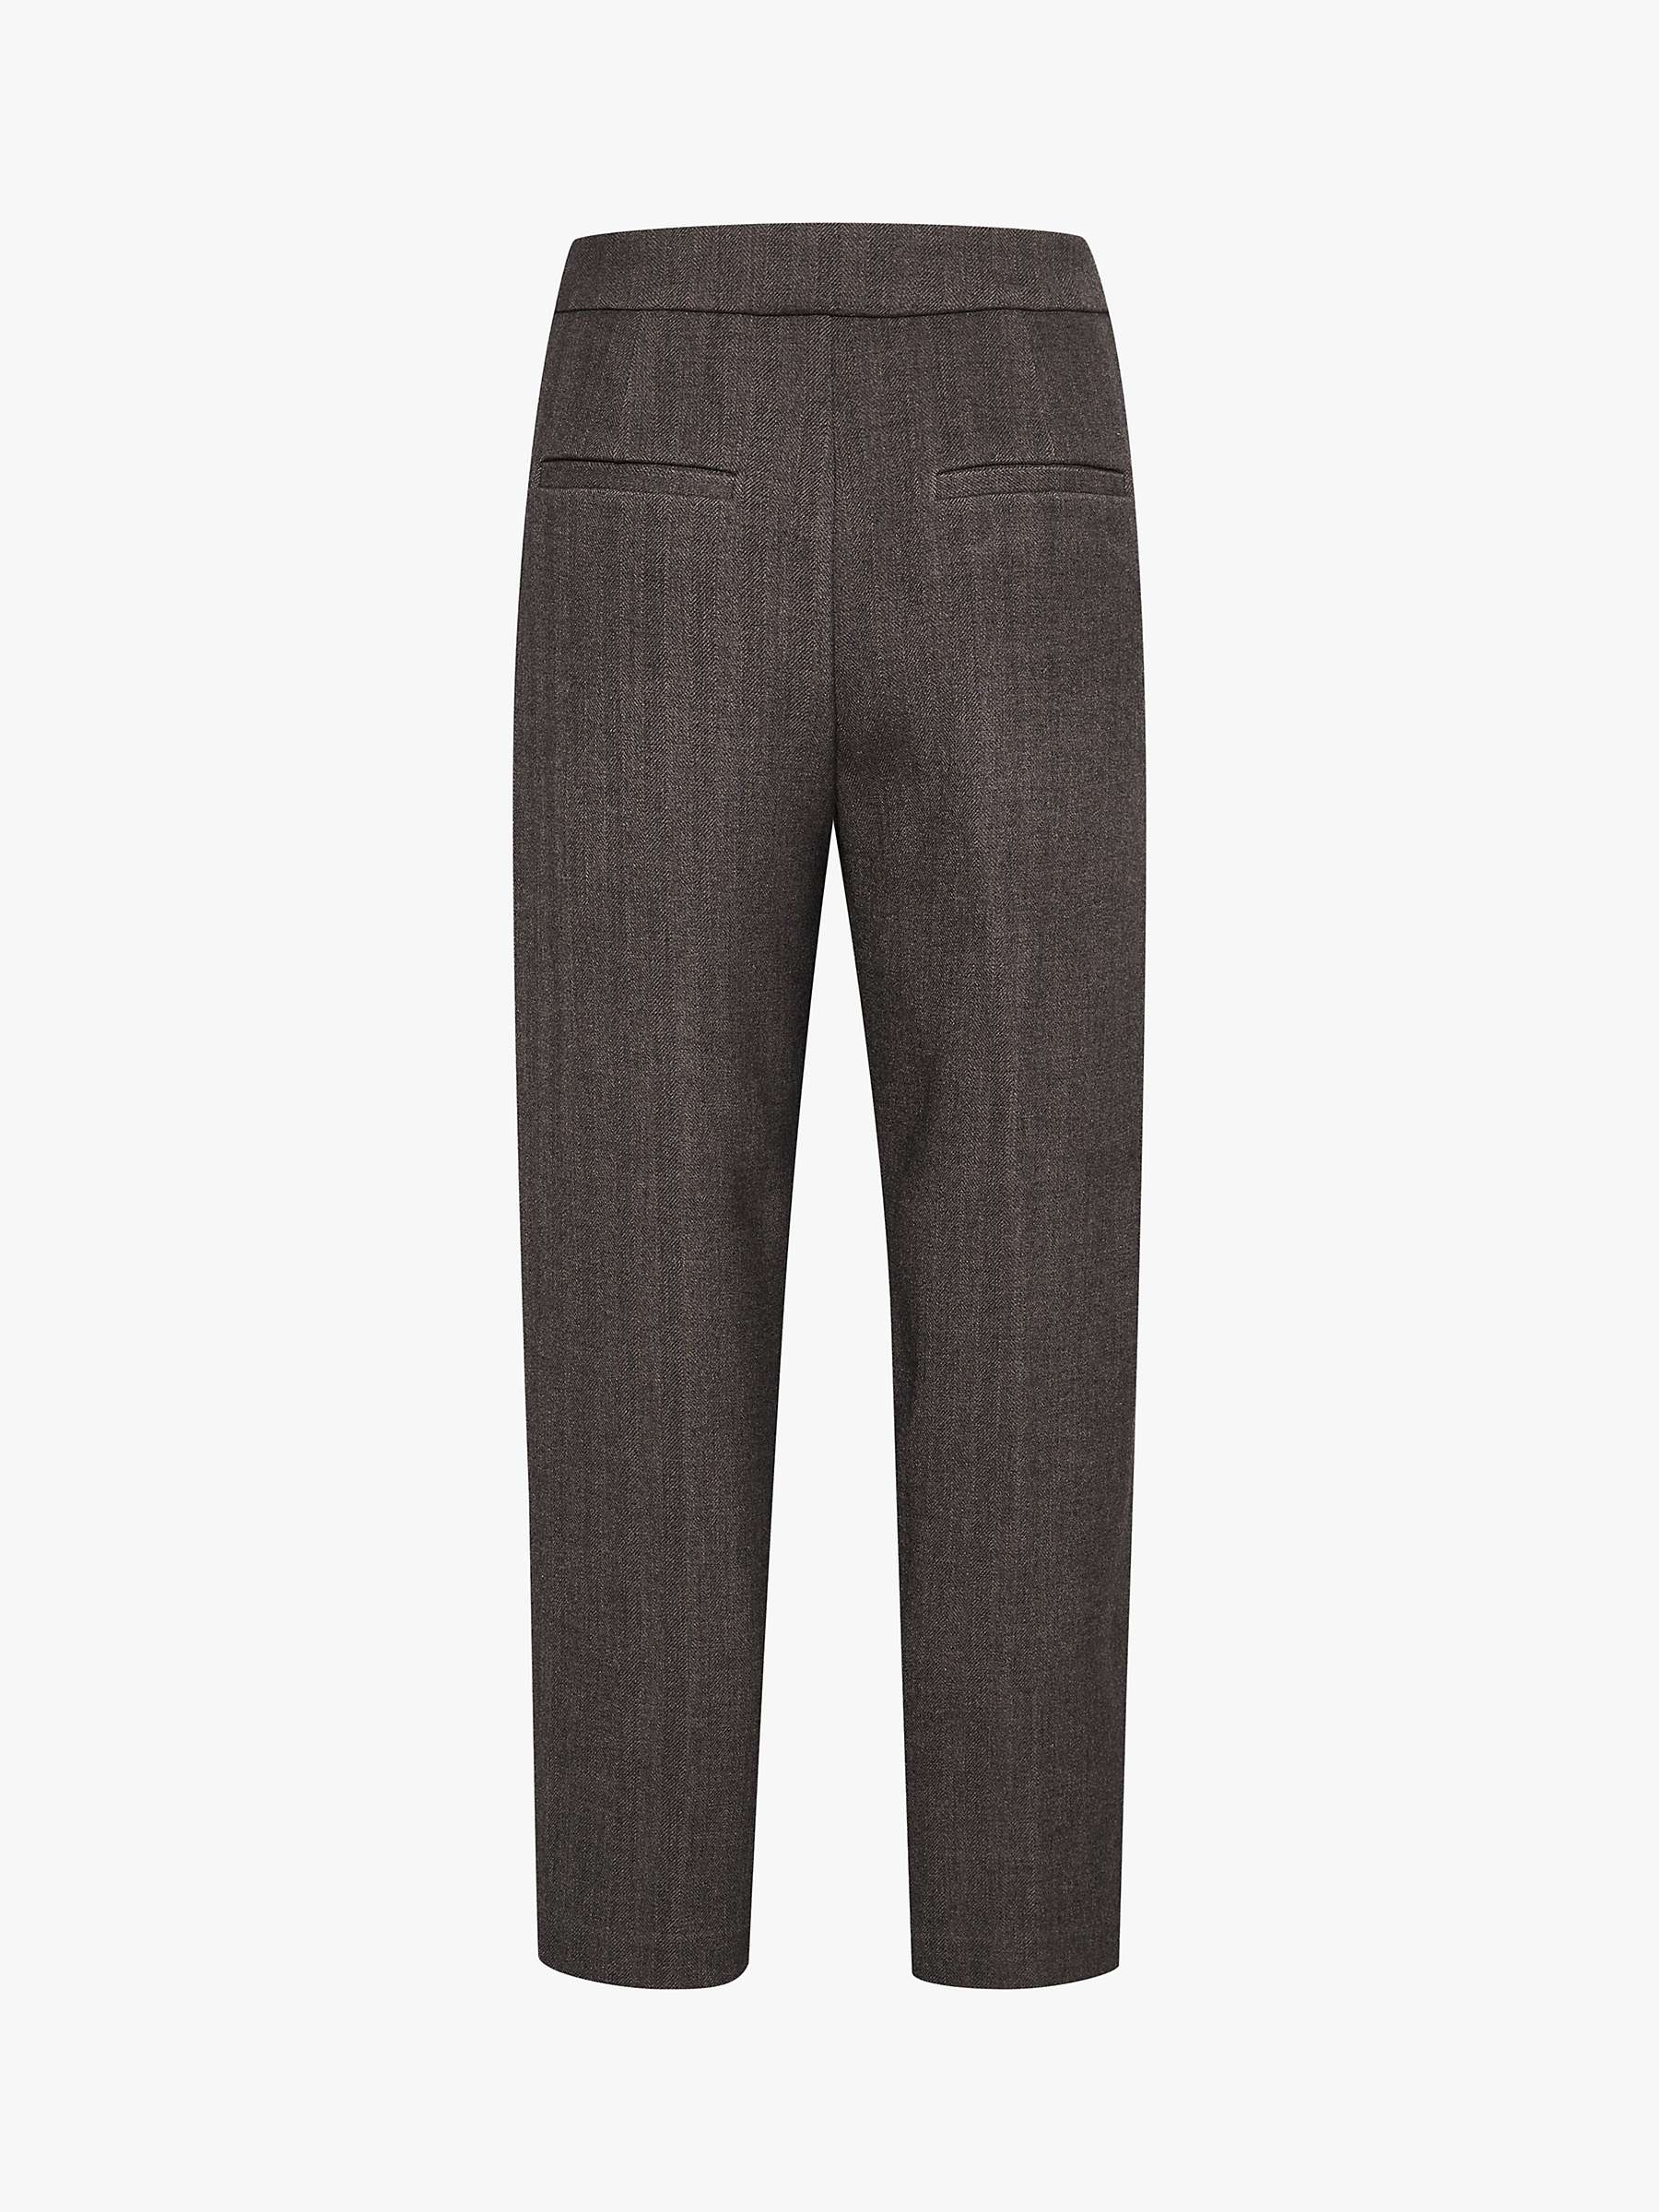 InWear Wren Suit Trousers, Brown Melange at John Lewis & Partners